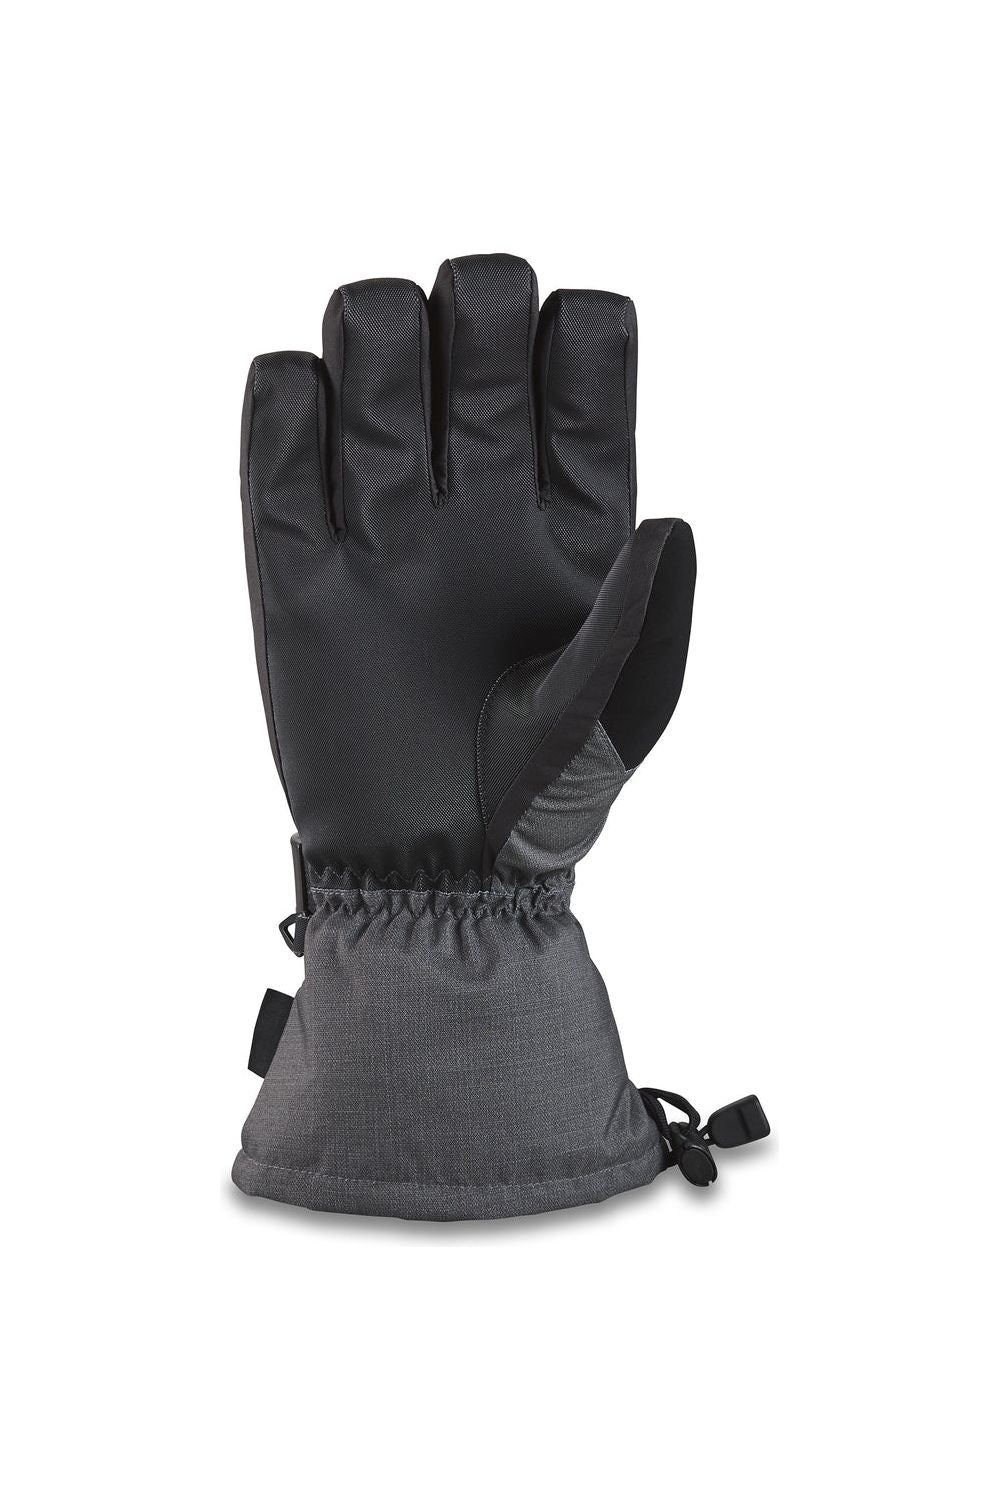 Dakine Scout Glove Carbon